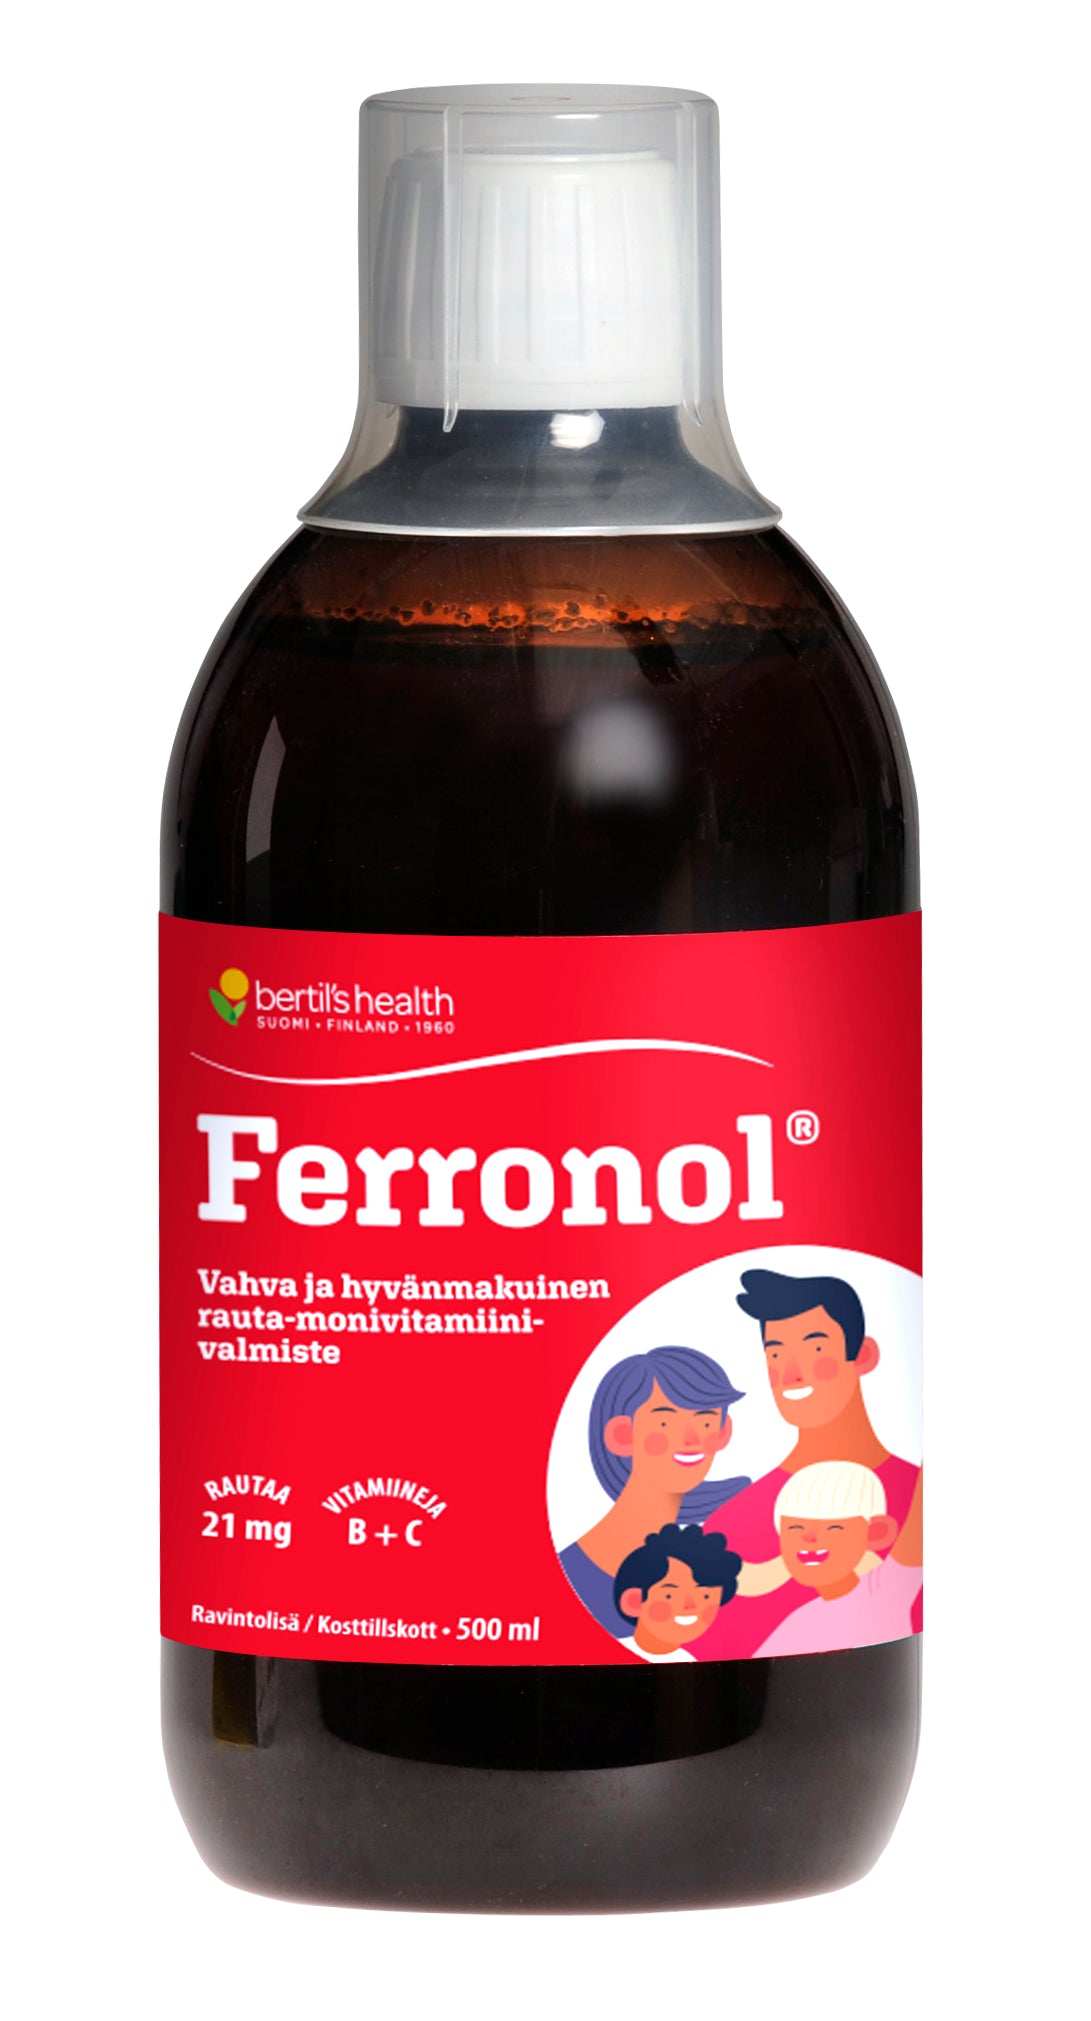 Ferronol - Kasviuute-rauta-C- ja B-vitamiinivalmiste 500 ml